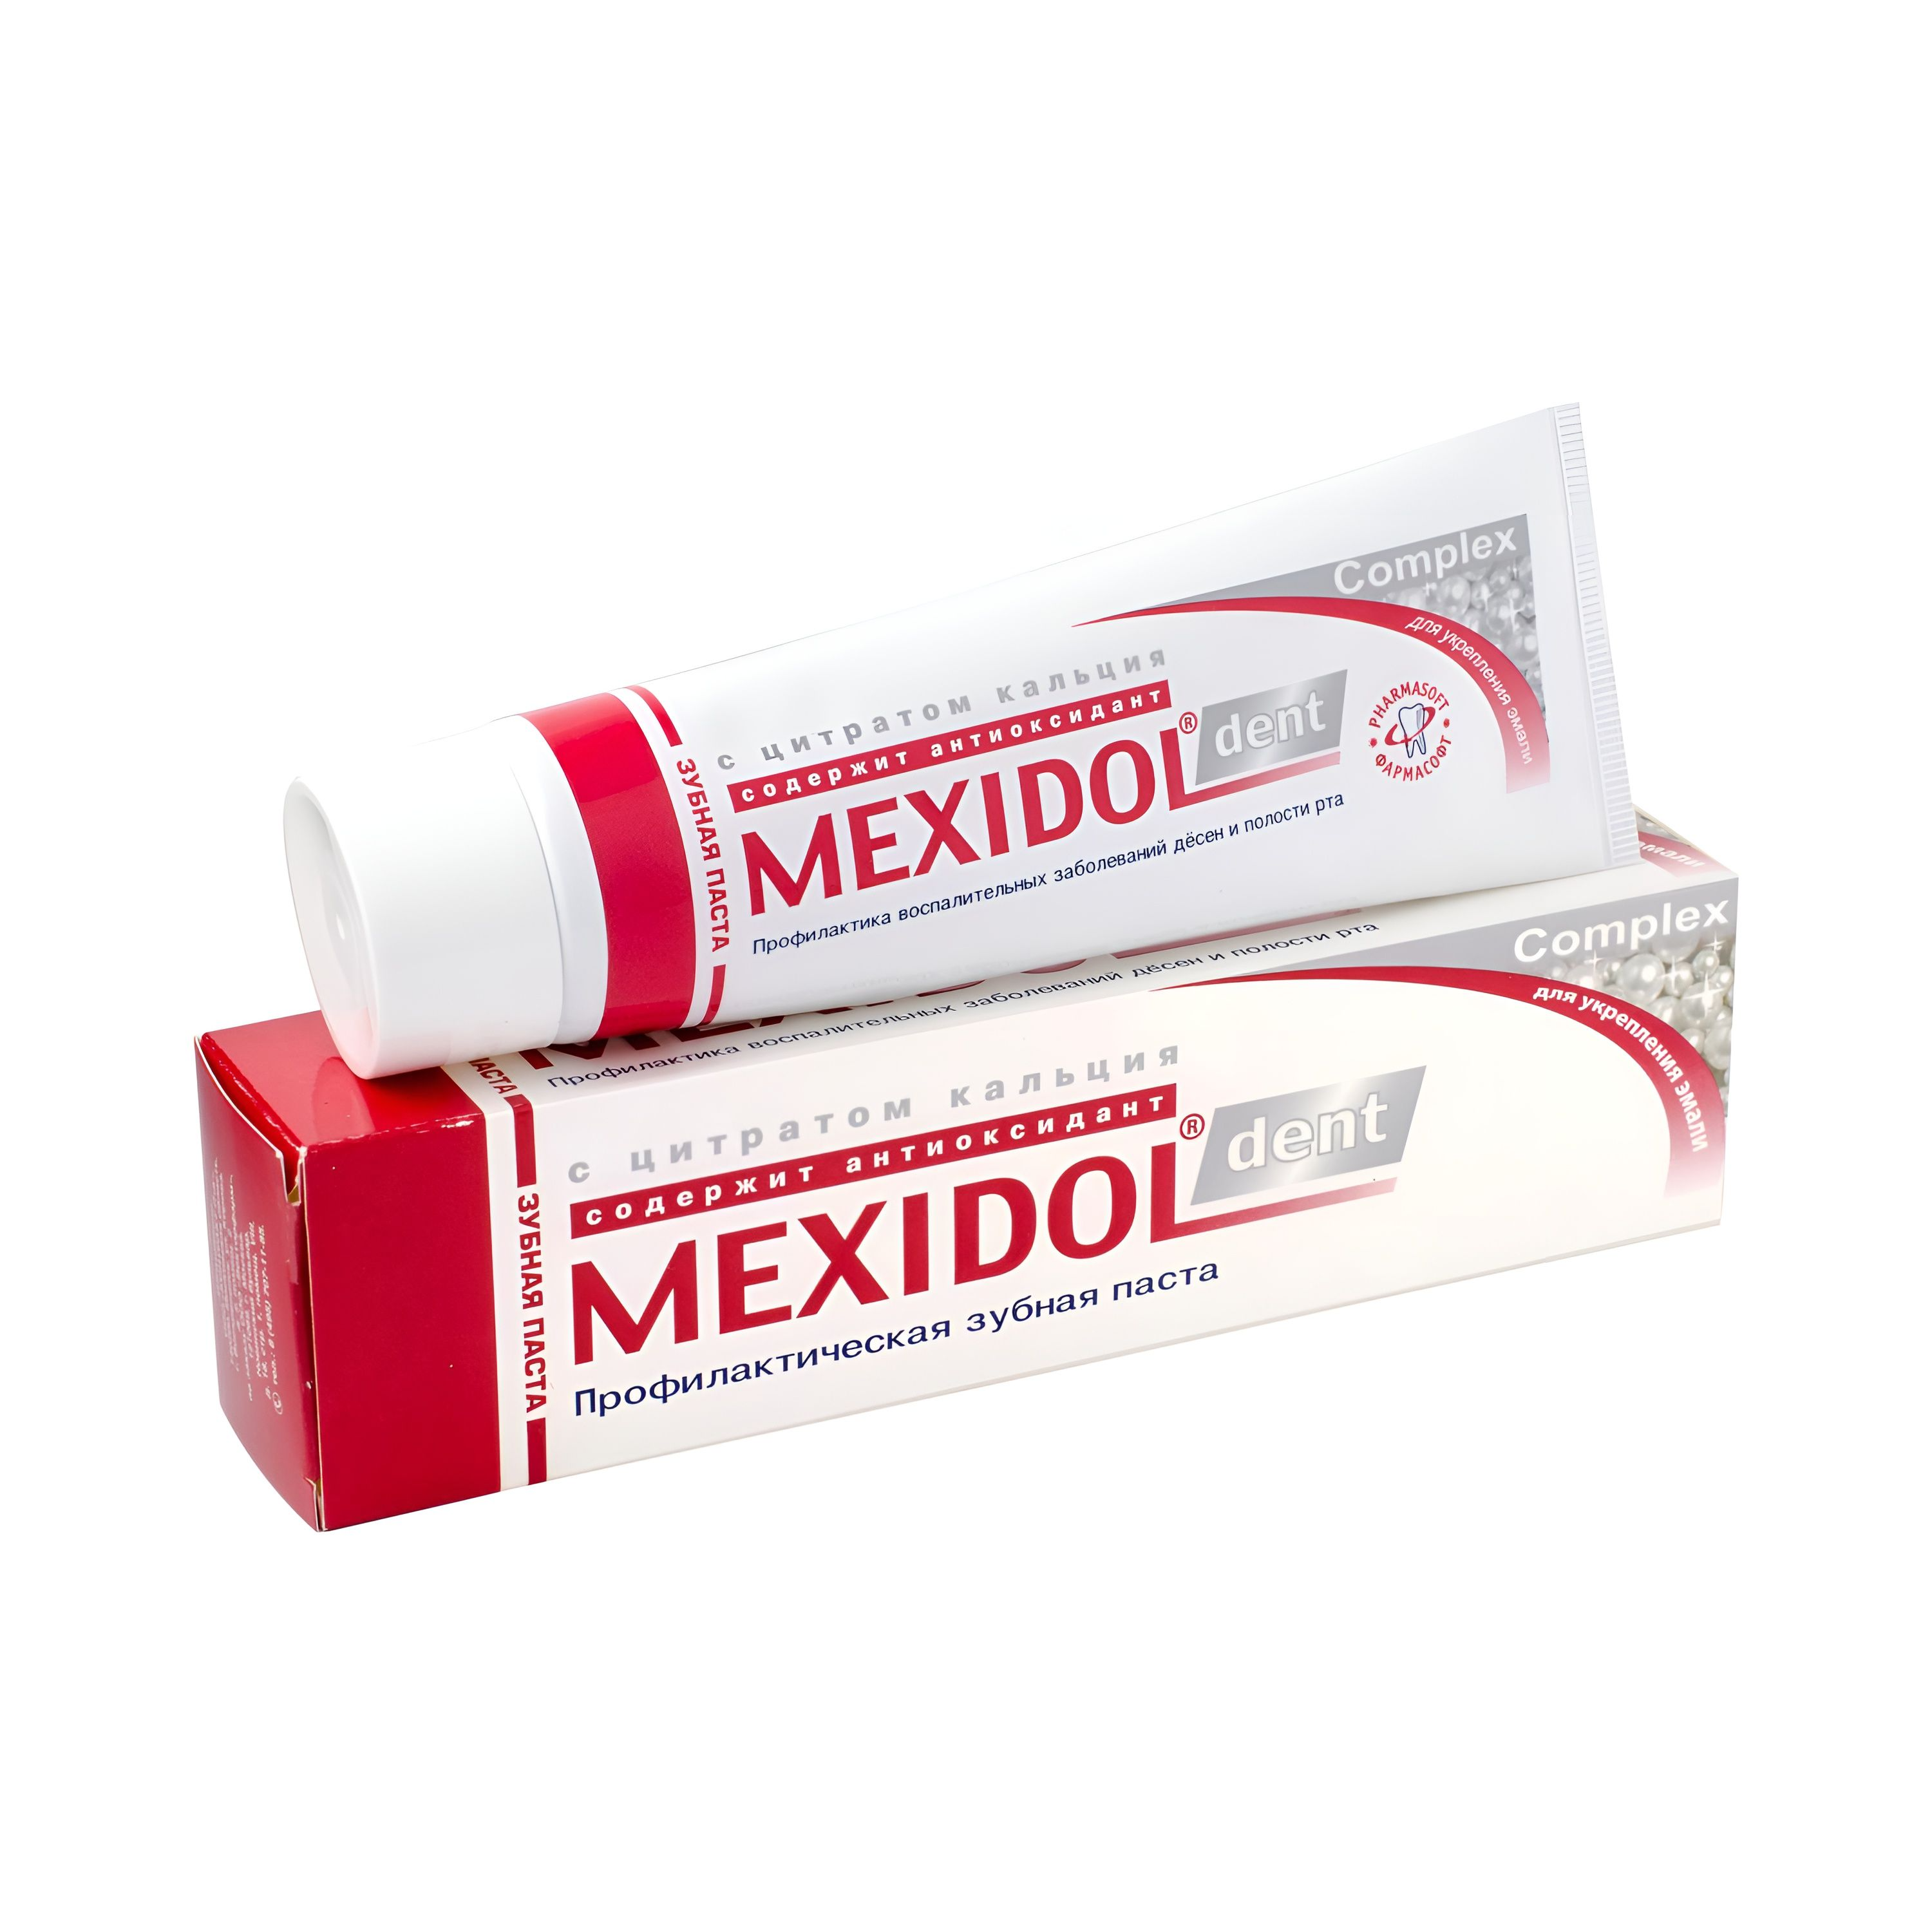 Мексидол Дент Комплекс, зубная паста, 65 г з паста мексидол дент комплекс 65г